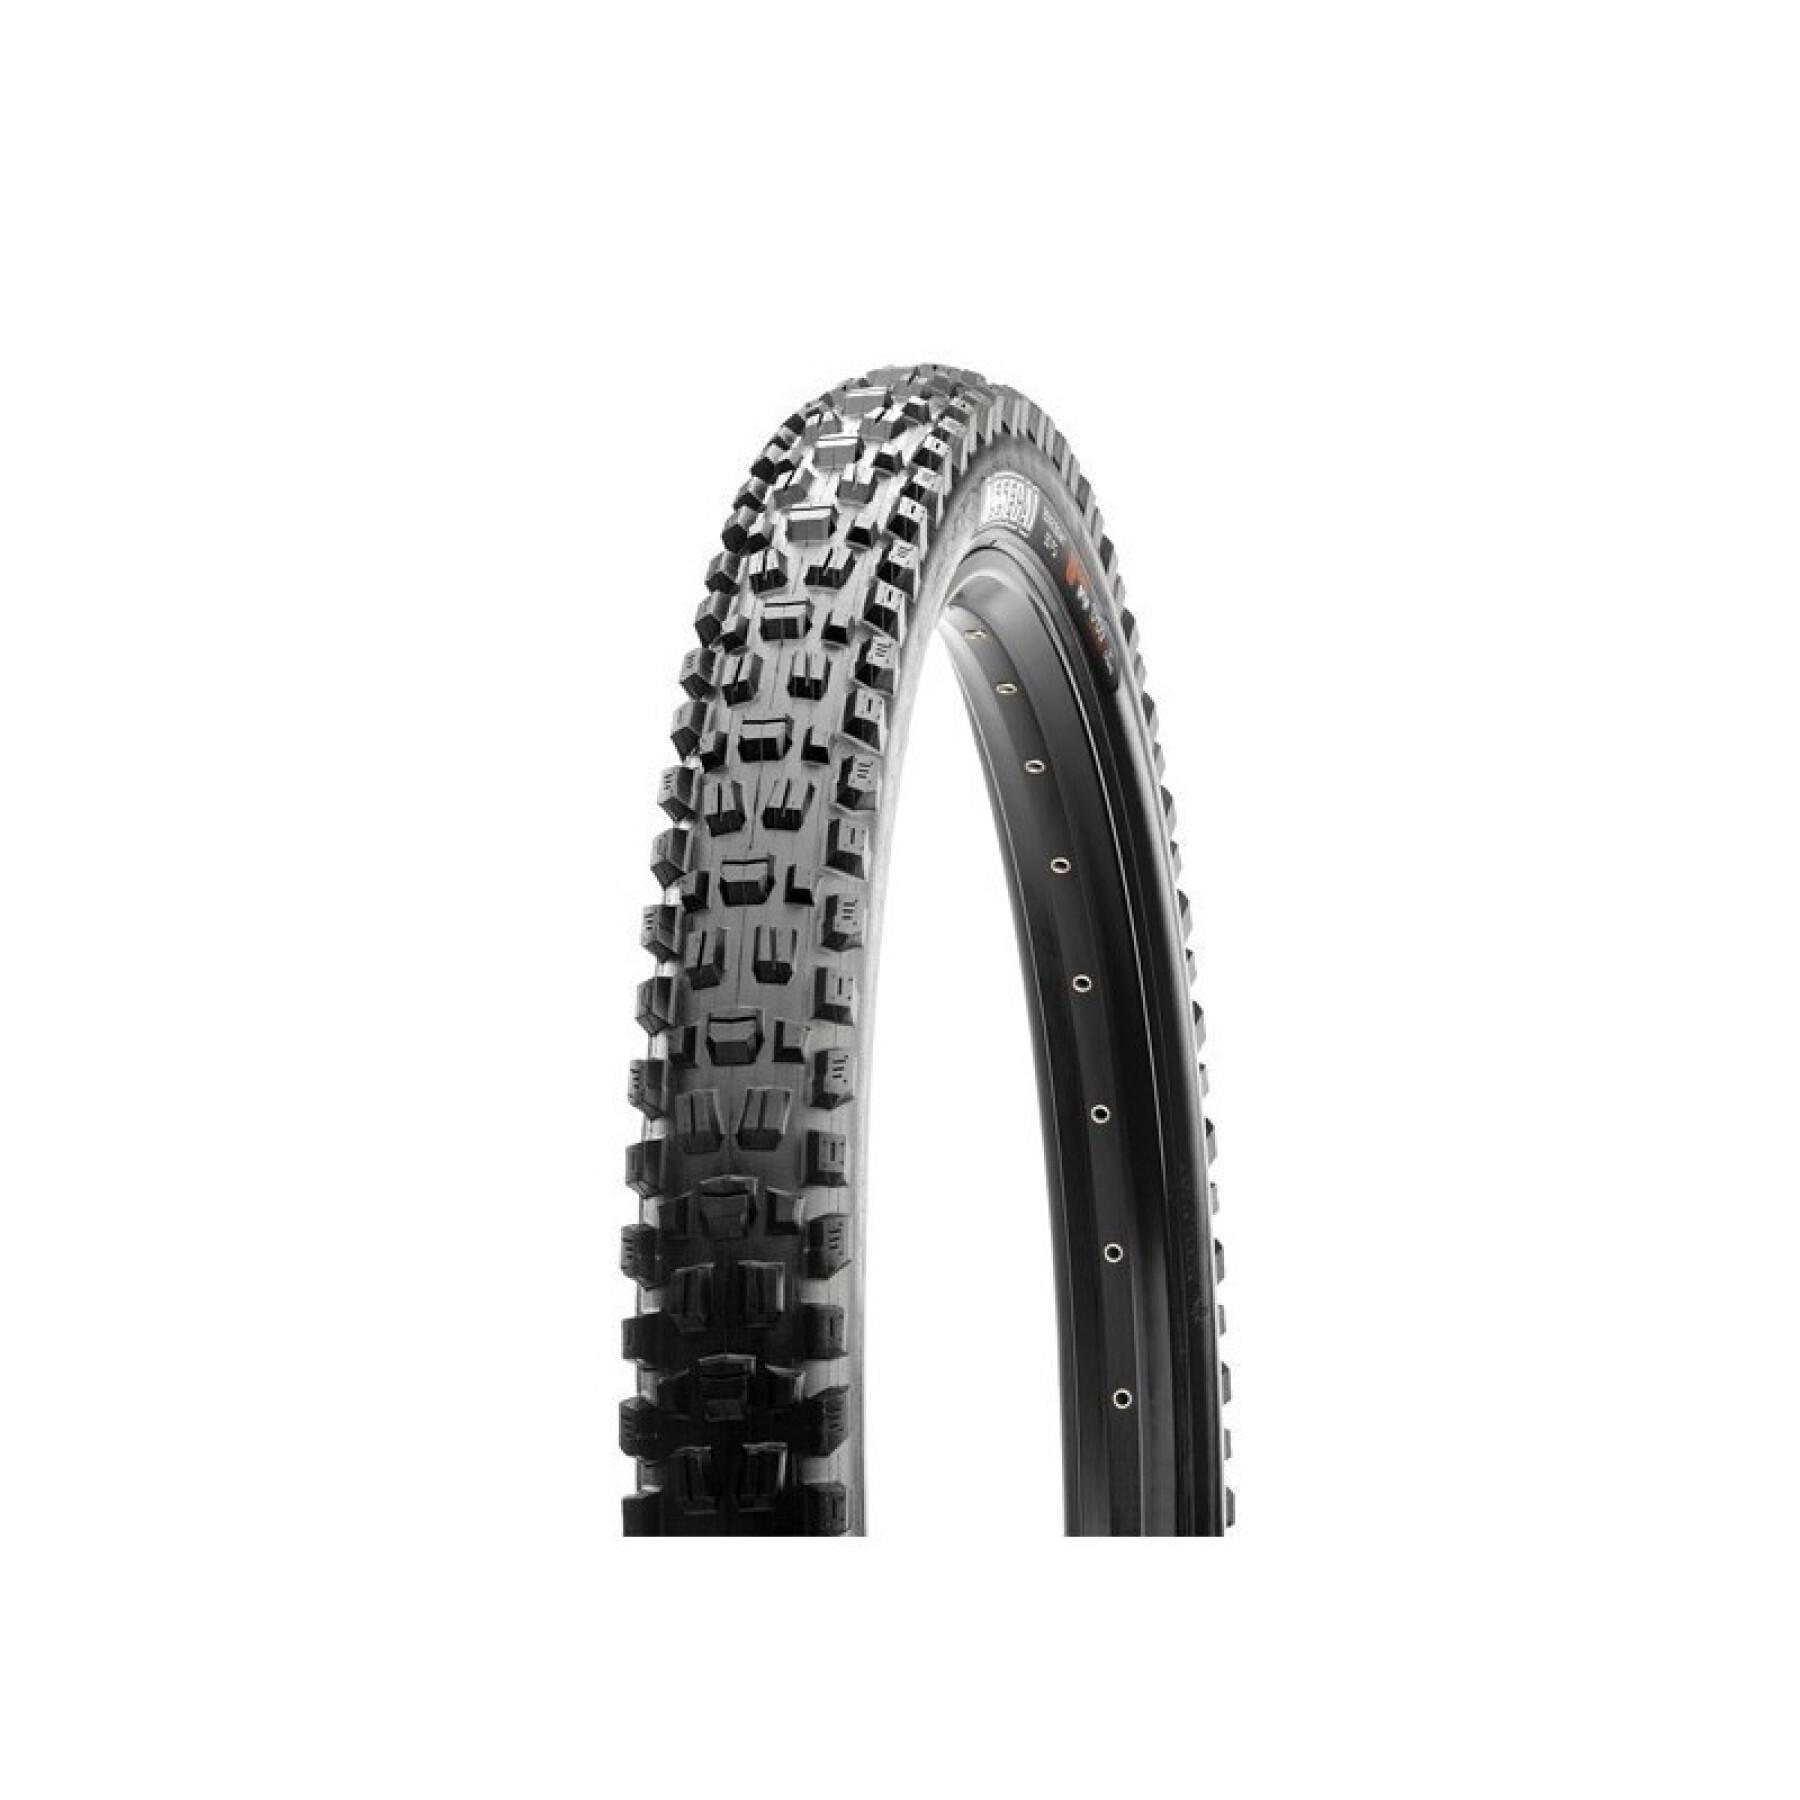 Soft tire Maxxis Assegai WT (Wide Trail) 3C Terra / Exo / Tubeless Ready